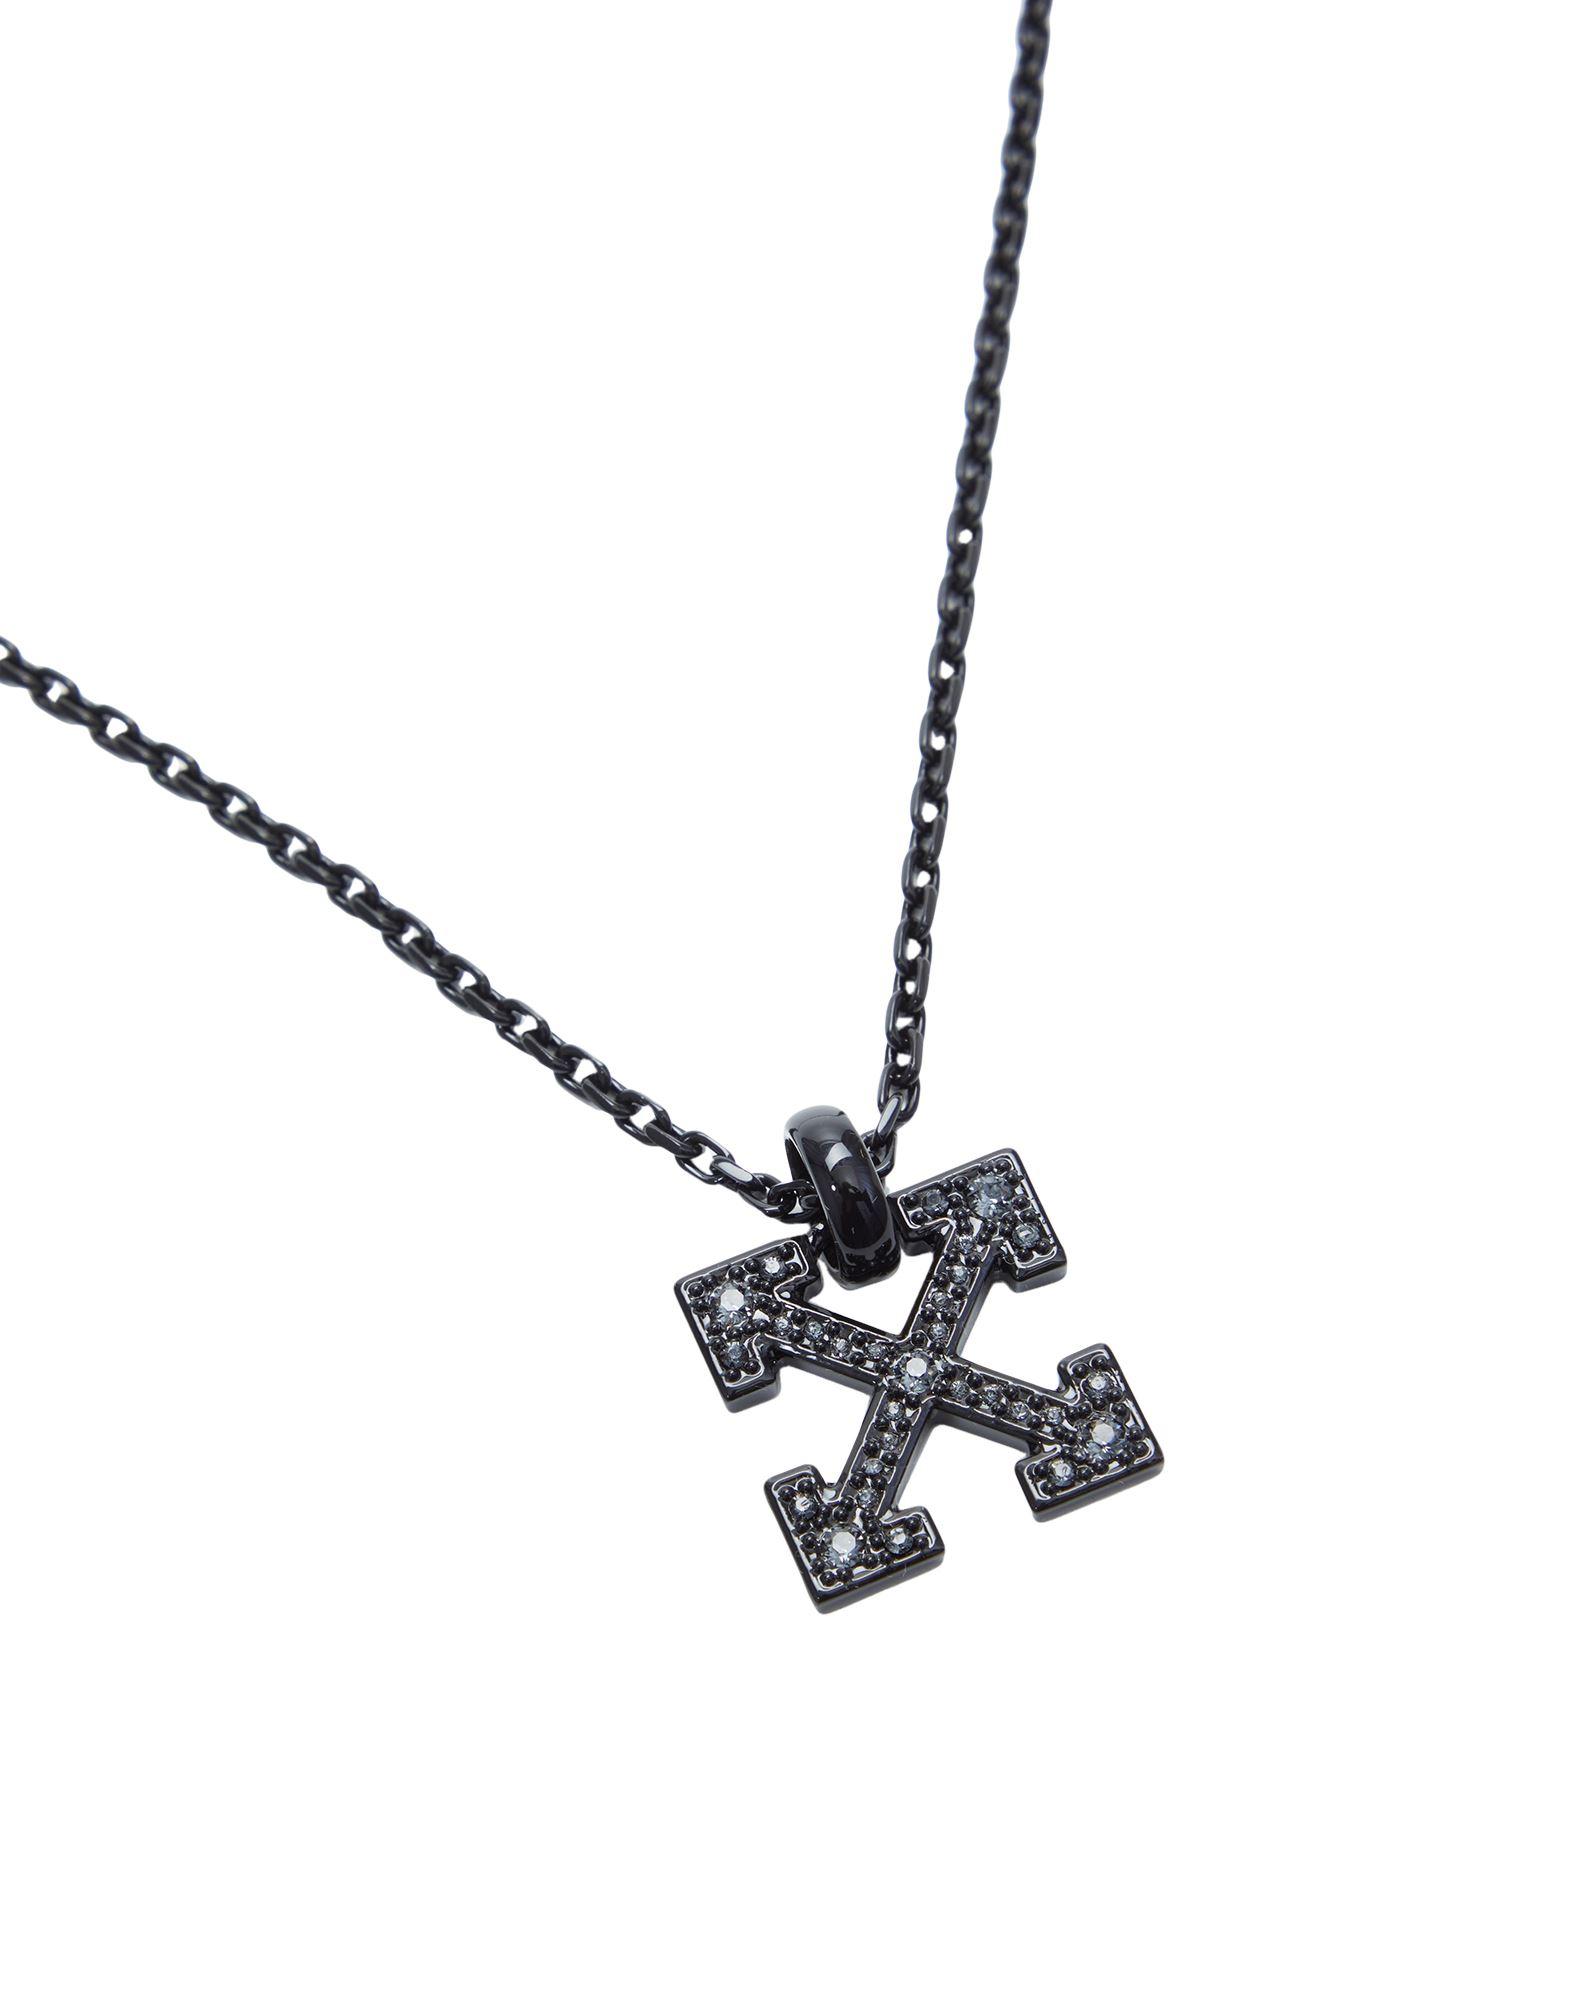 Off-White c/o Virgil Abloh Textured Hexnut Necklace in Metallic for Men